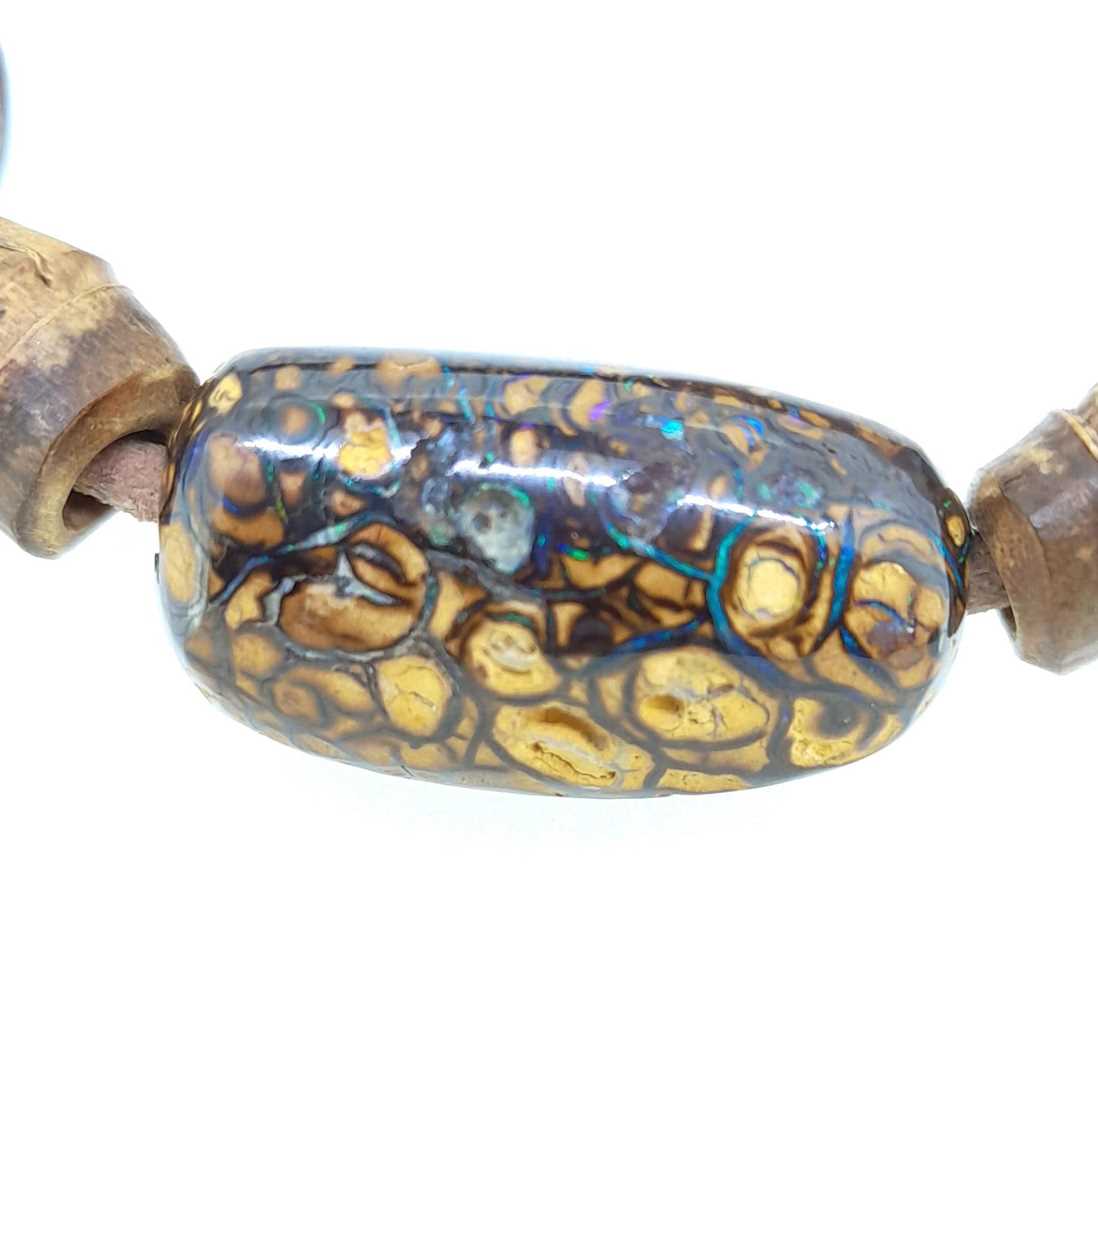 A large necklace of boulder opals, - Image 4 of 5